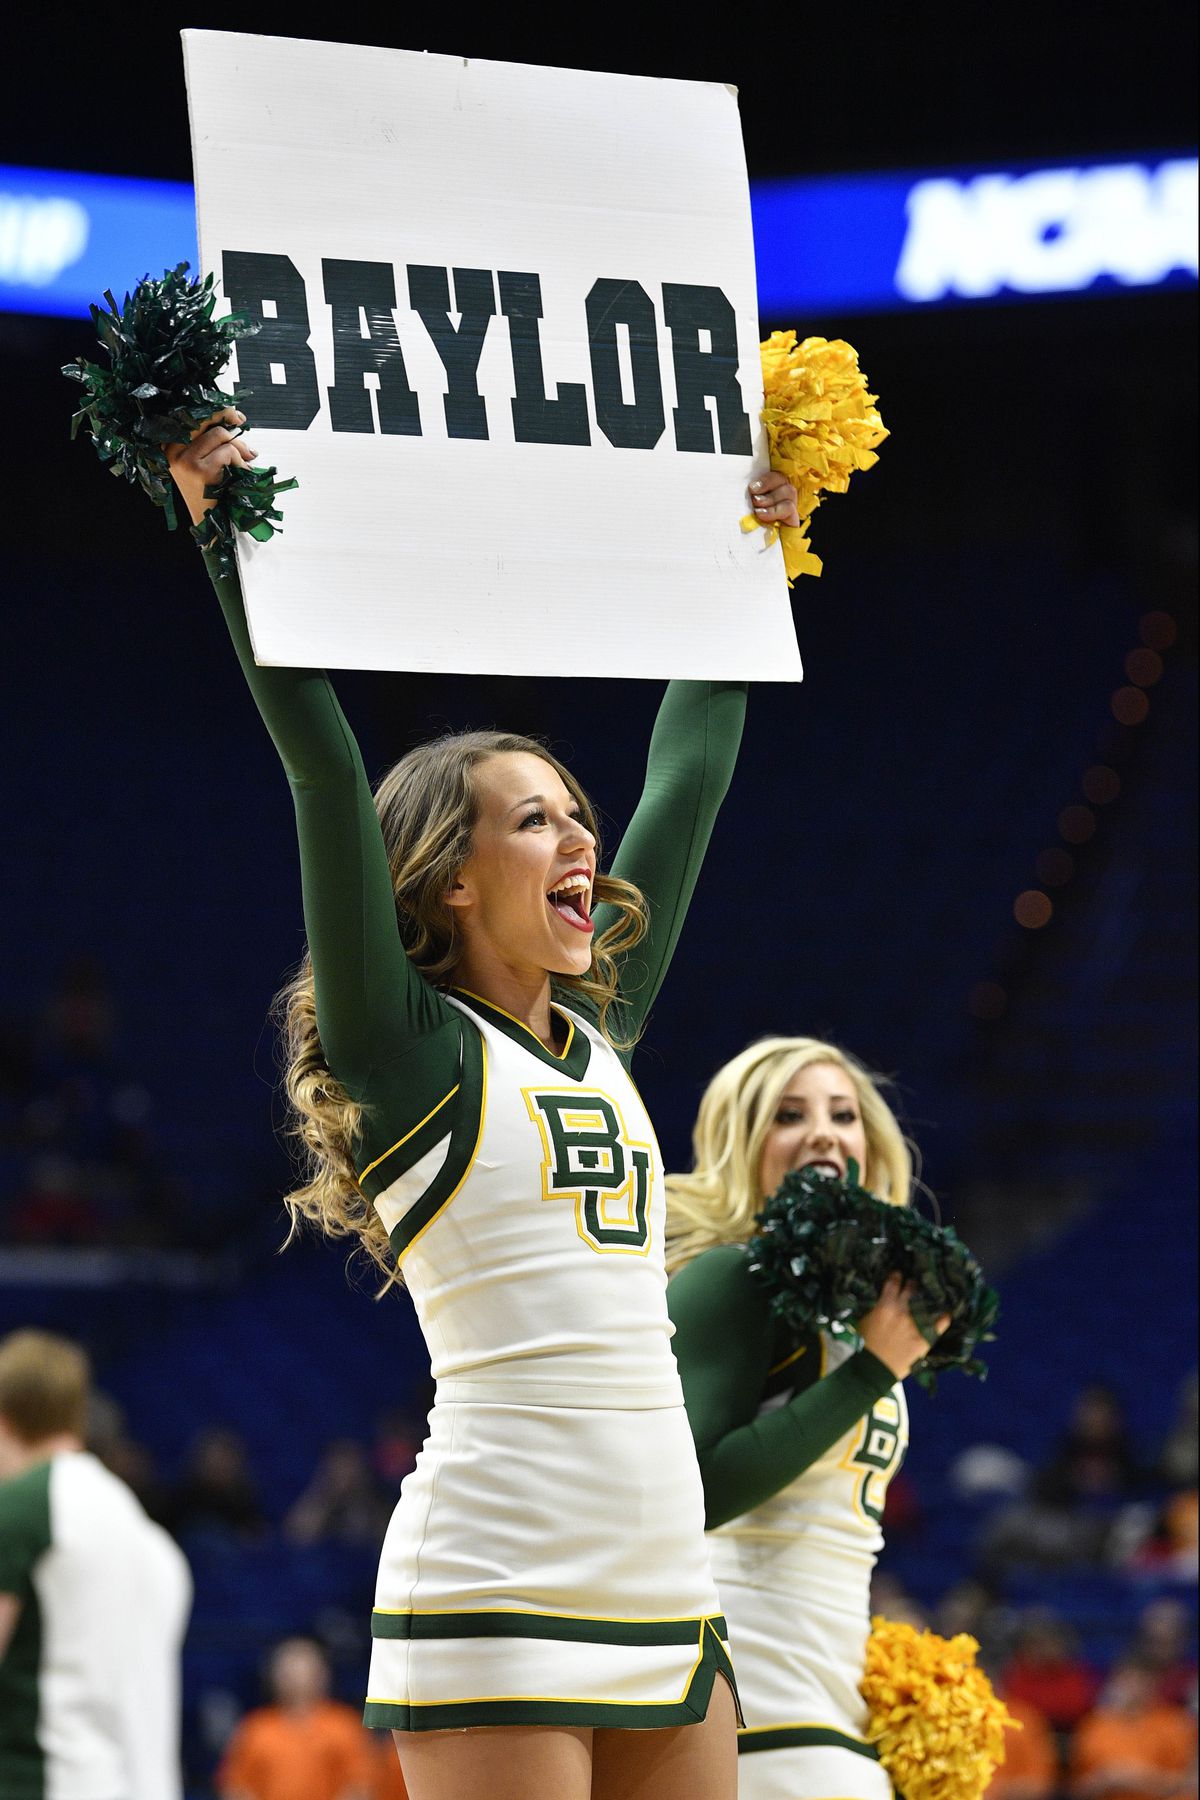 NCAA Womens Basketball: NCAA Tournament-Lexington Regional - Baylor vs Oregon State